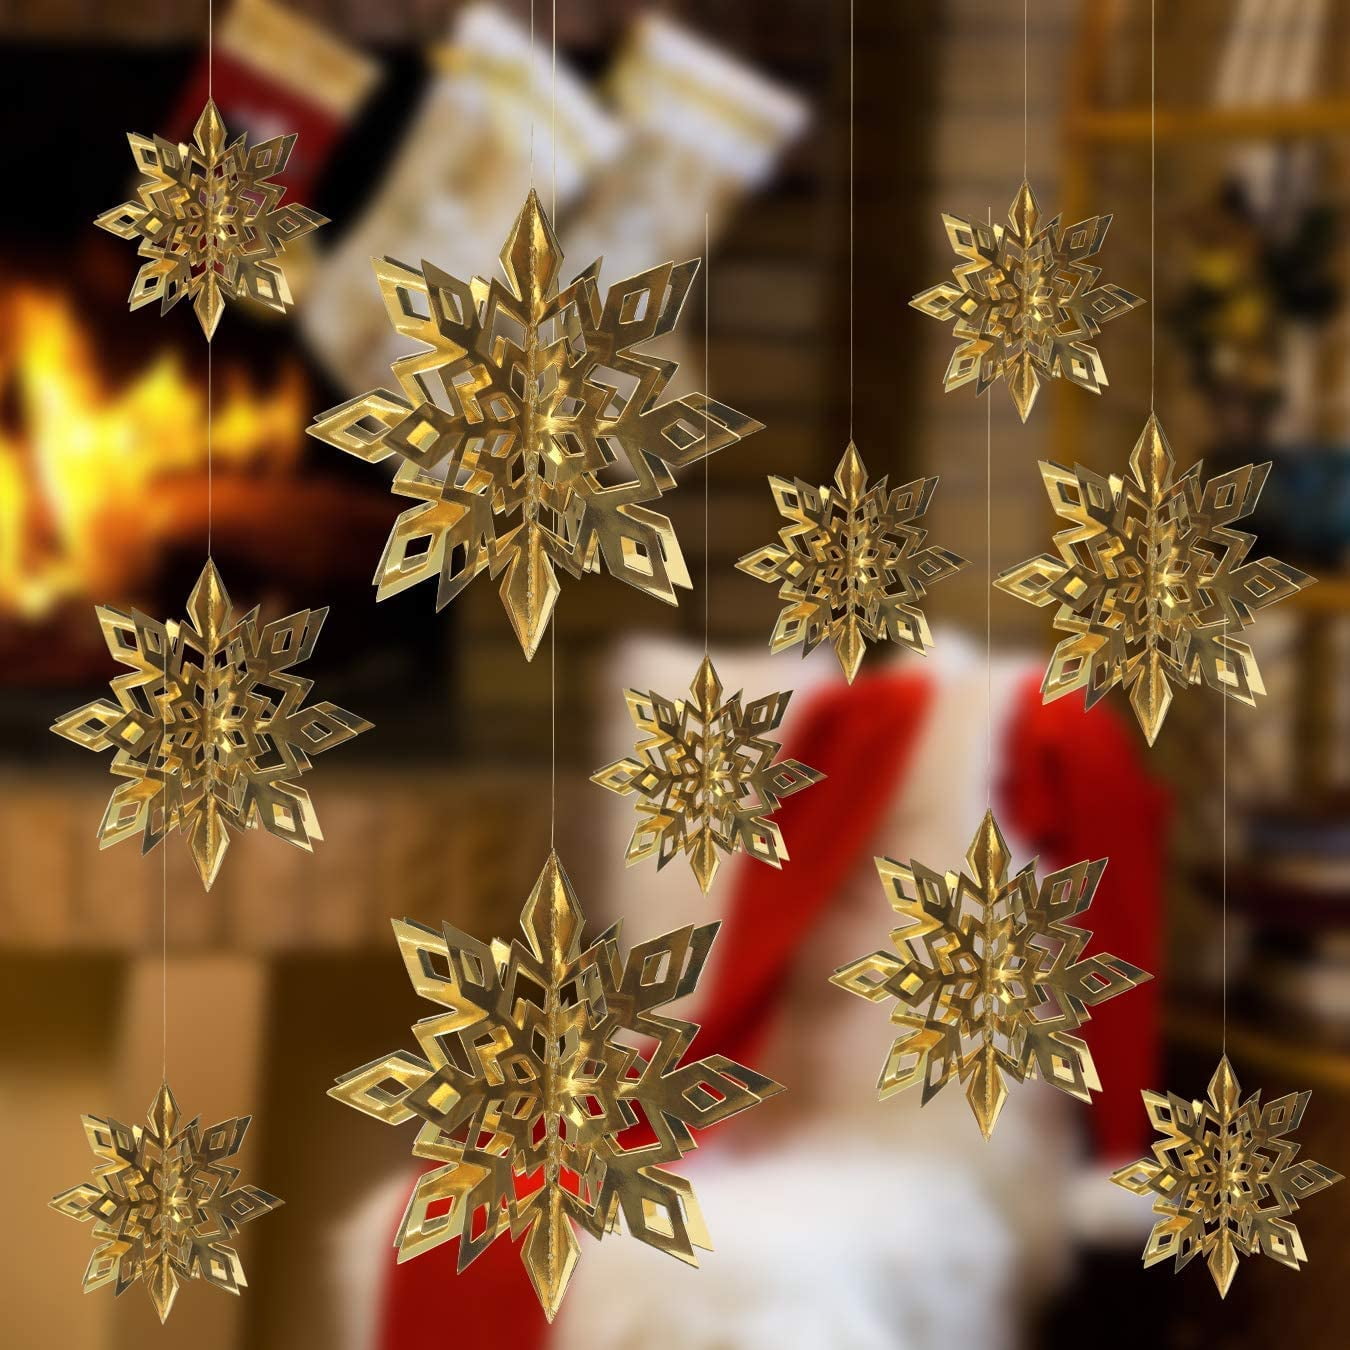 24PCS Snowflake Christmas Decorations, 3D Large Uganda